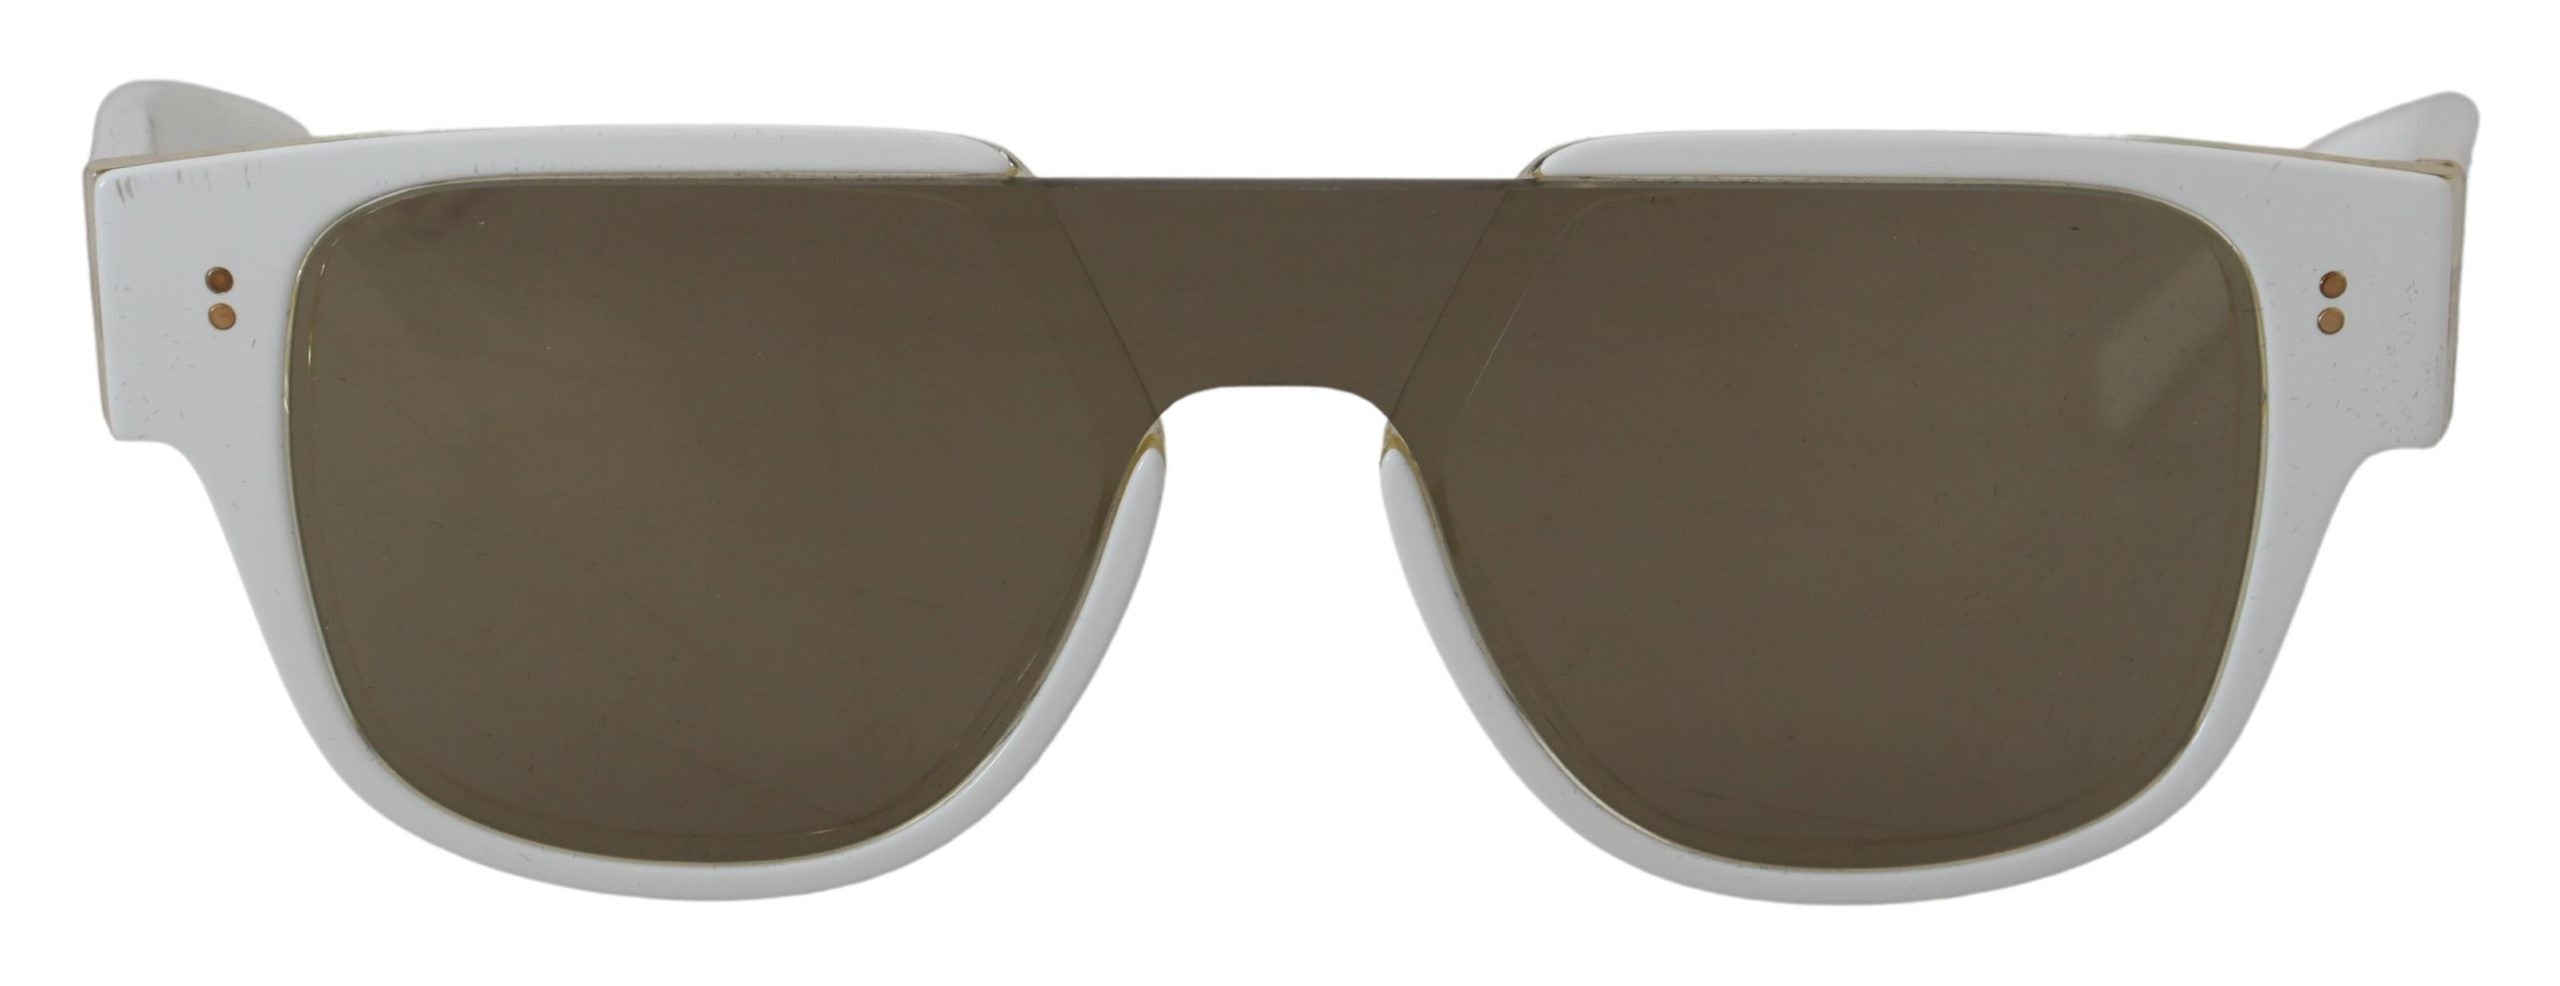 DOLCE & GABBANA Dolce & Gabbana Acetate Full Rim Frame Shades DG4356F Women's Sunglasses